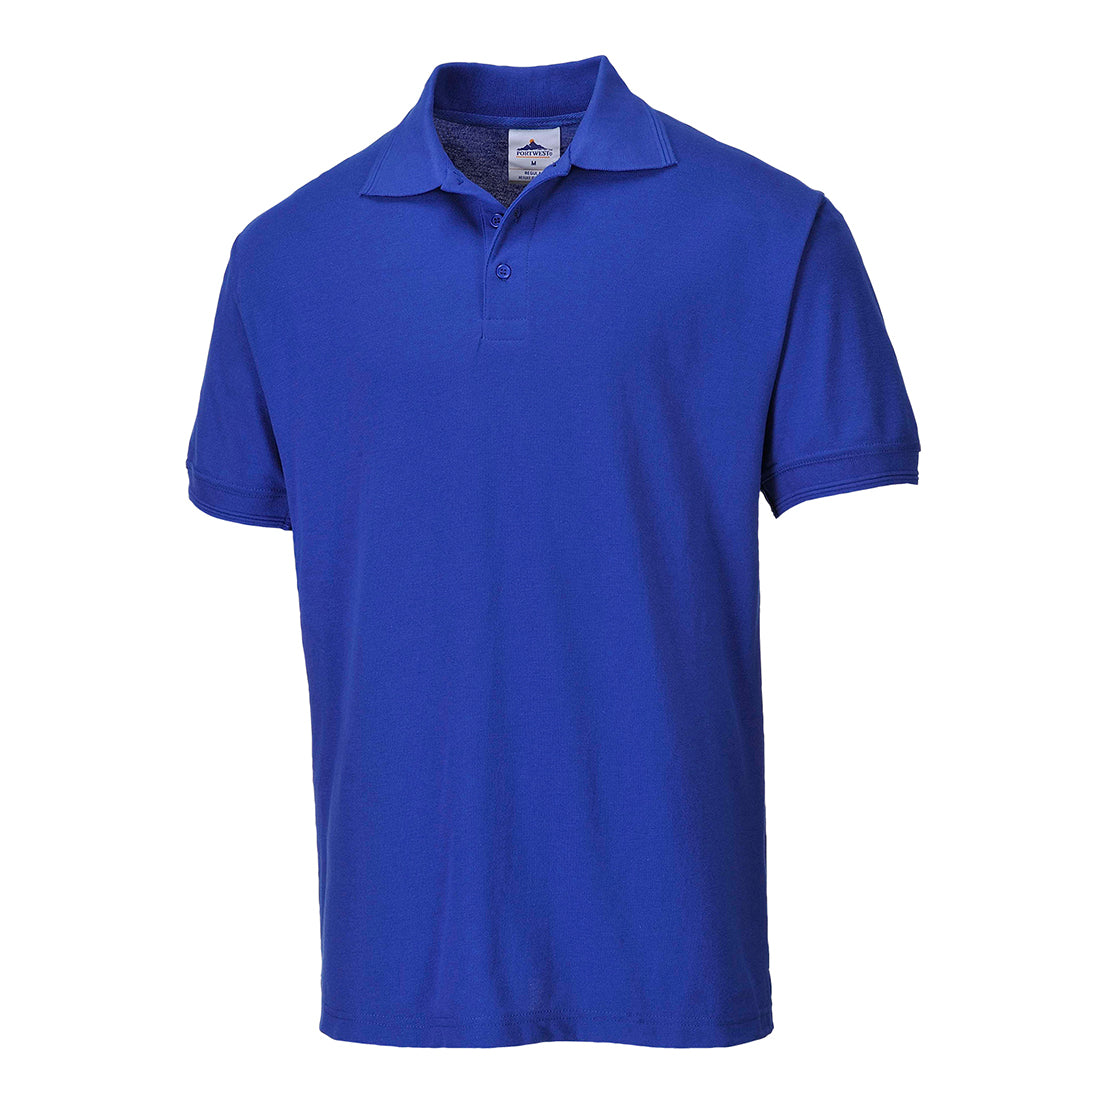 Naples Polo Shirt- B210 Royal blue front